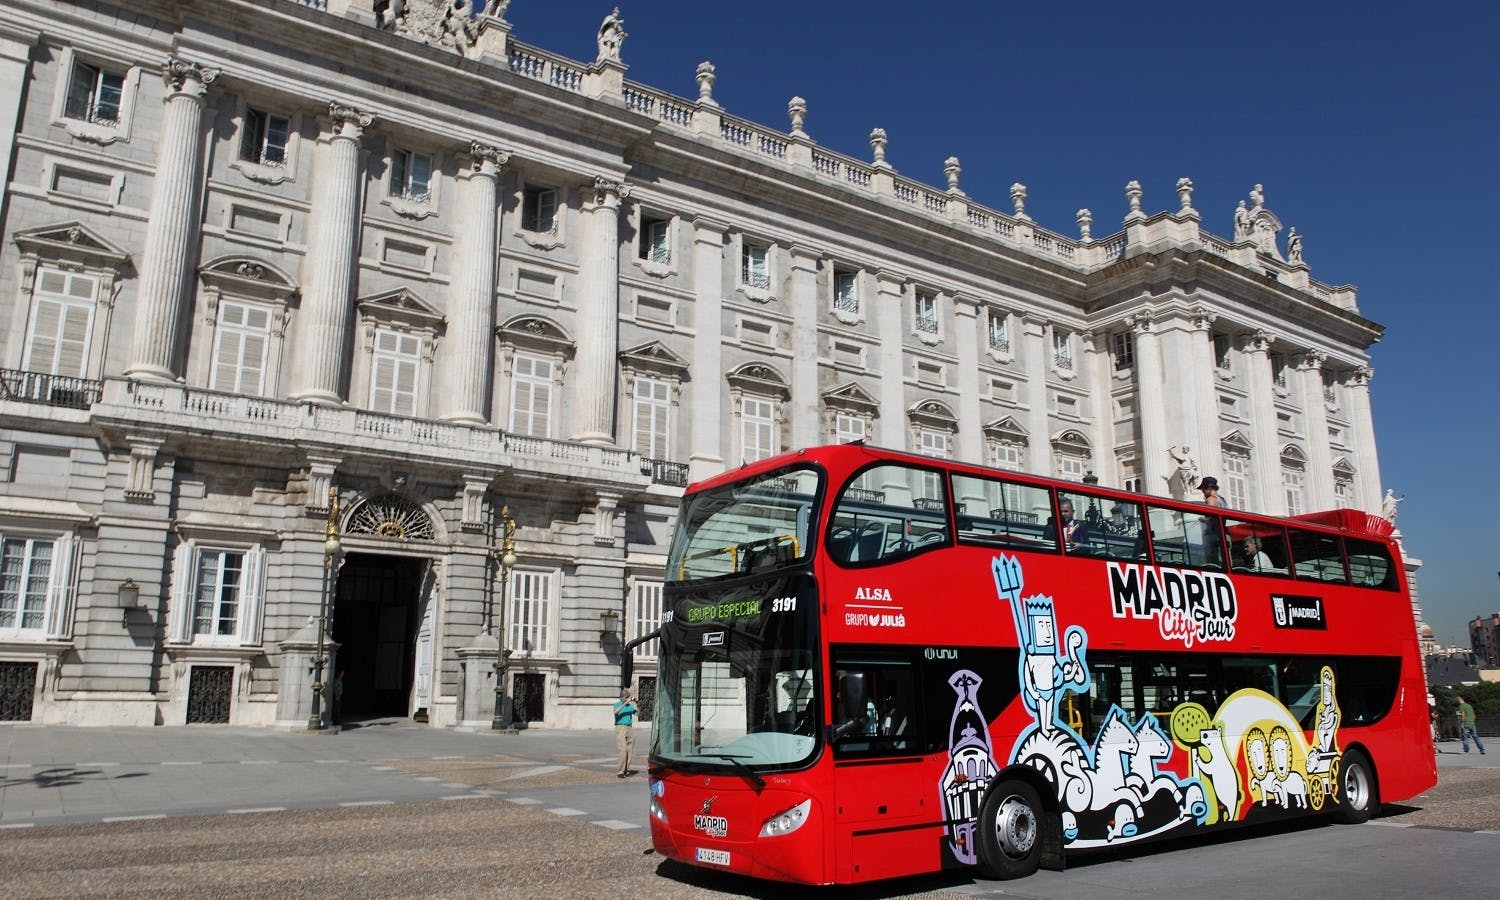 Madrid city tour hop-on hop-off bus tickets